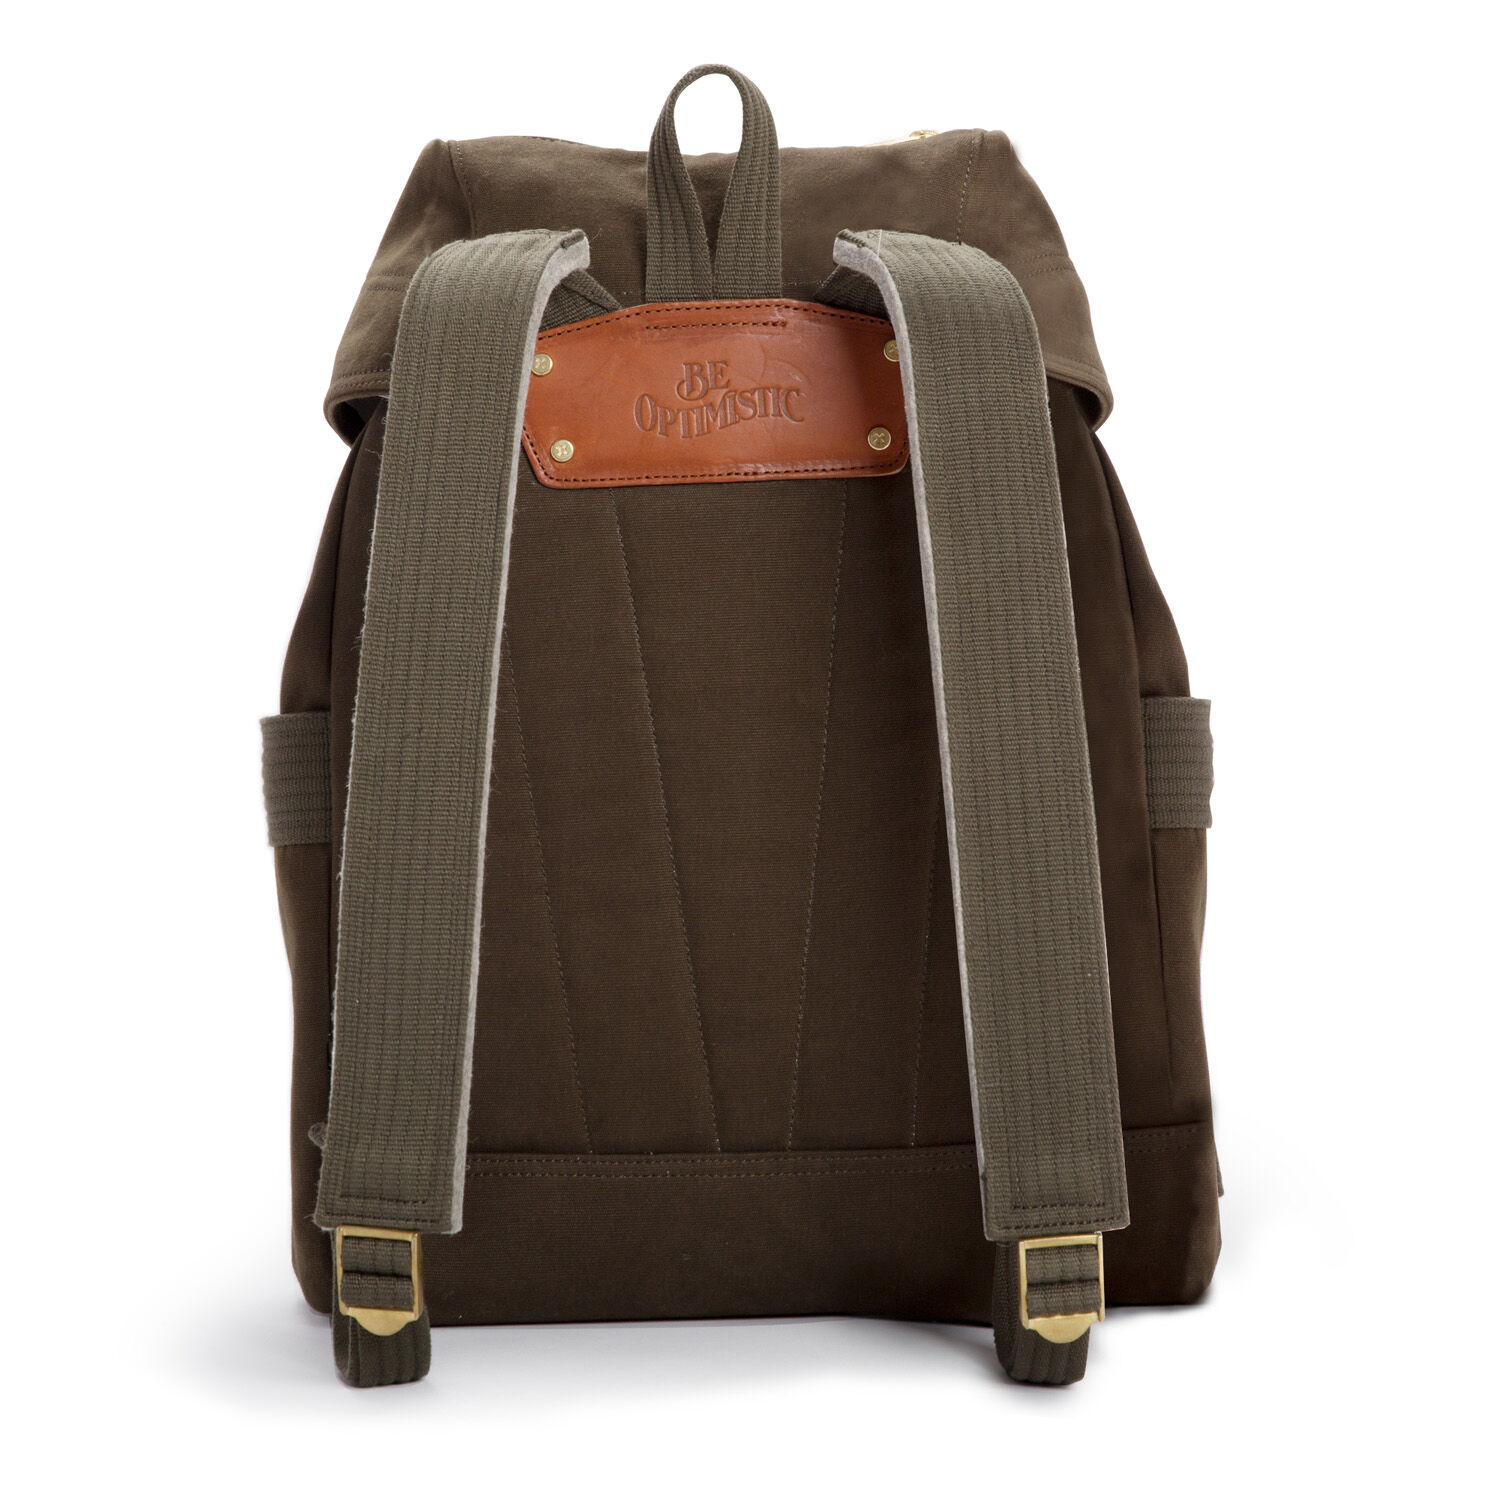 Victorinox Altmont Professional Deluxe Travel Laptop Backpack in black -  602155